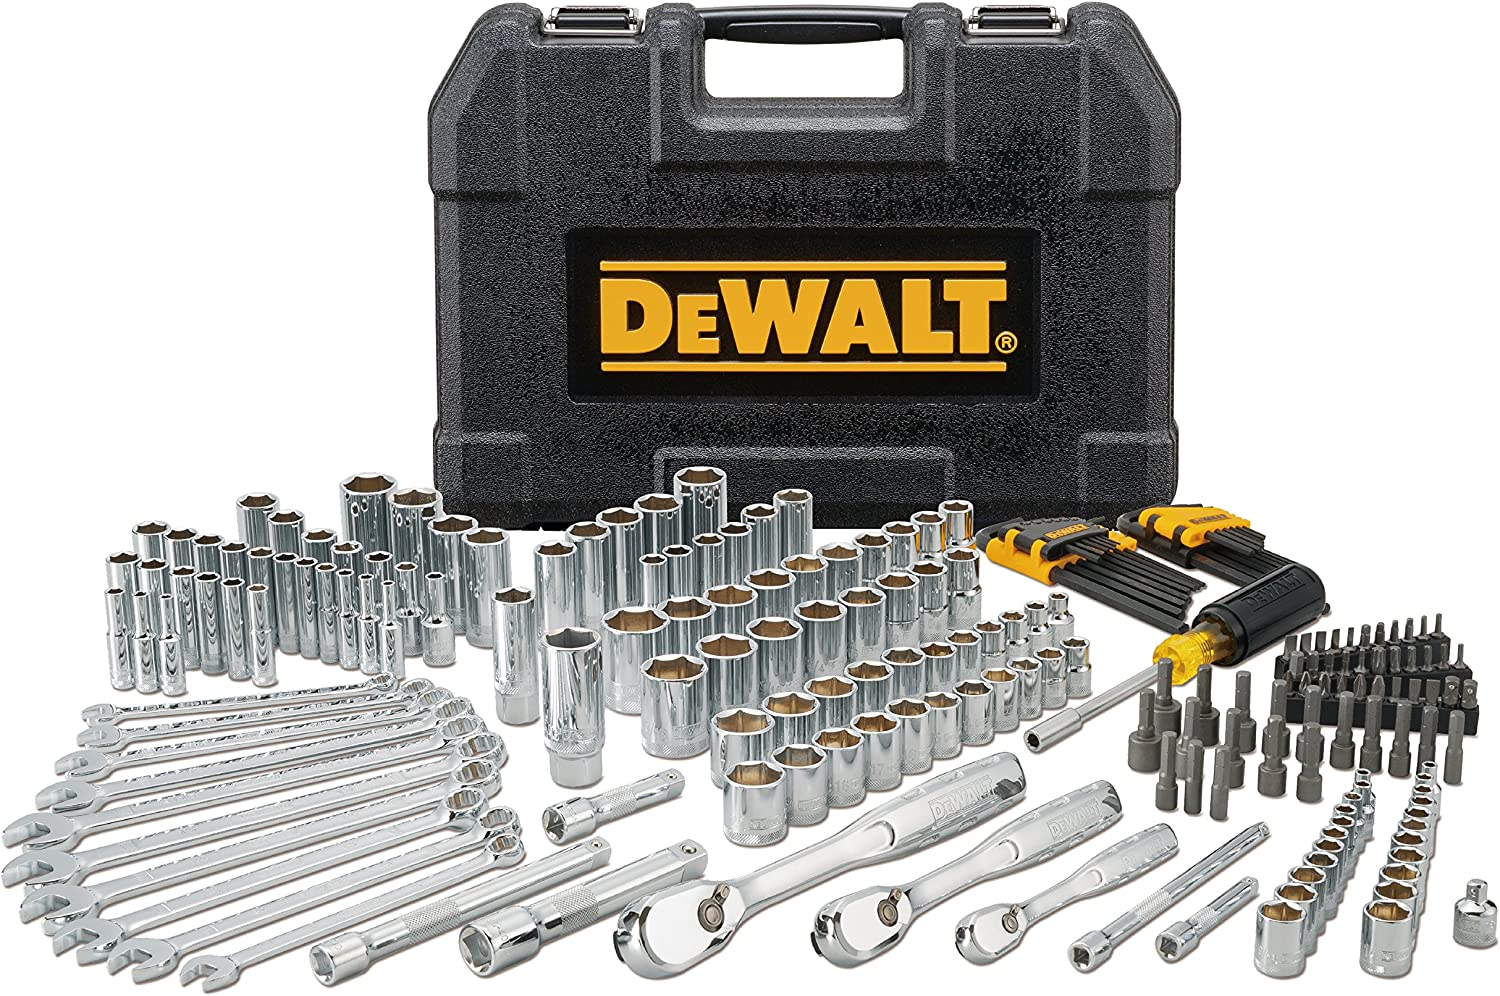 205-Pc DEWALT Mechanics Tool Set - 1/4" & 3/8" & 1/2" Drive, SAE/Metric $112.00